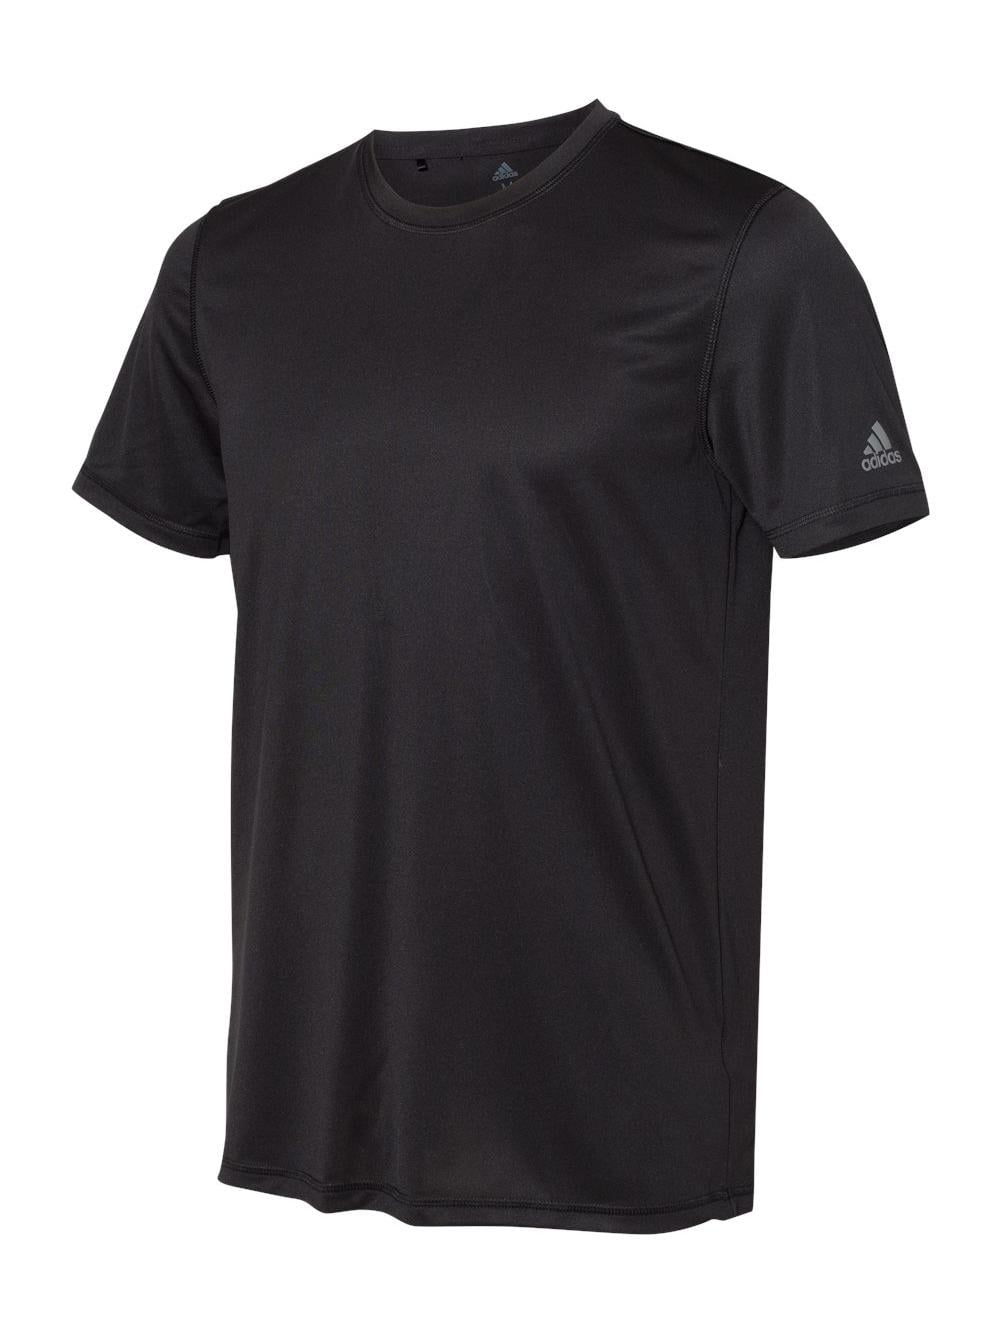 Adidas - Sport T-Shirt A376 - Black - Size: 3XL - Walmart.com